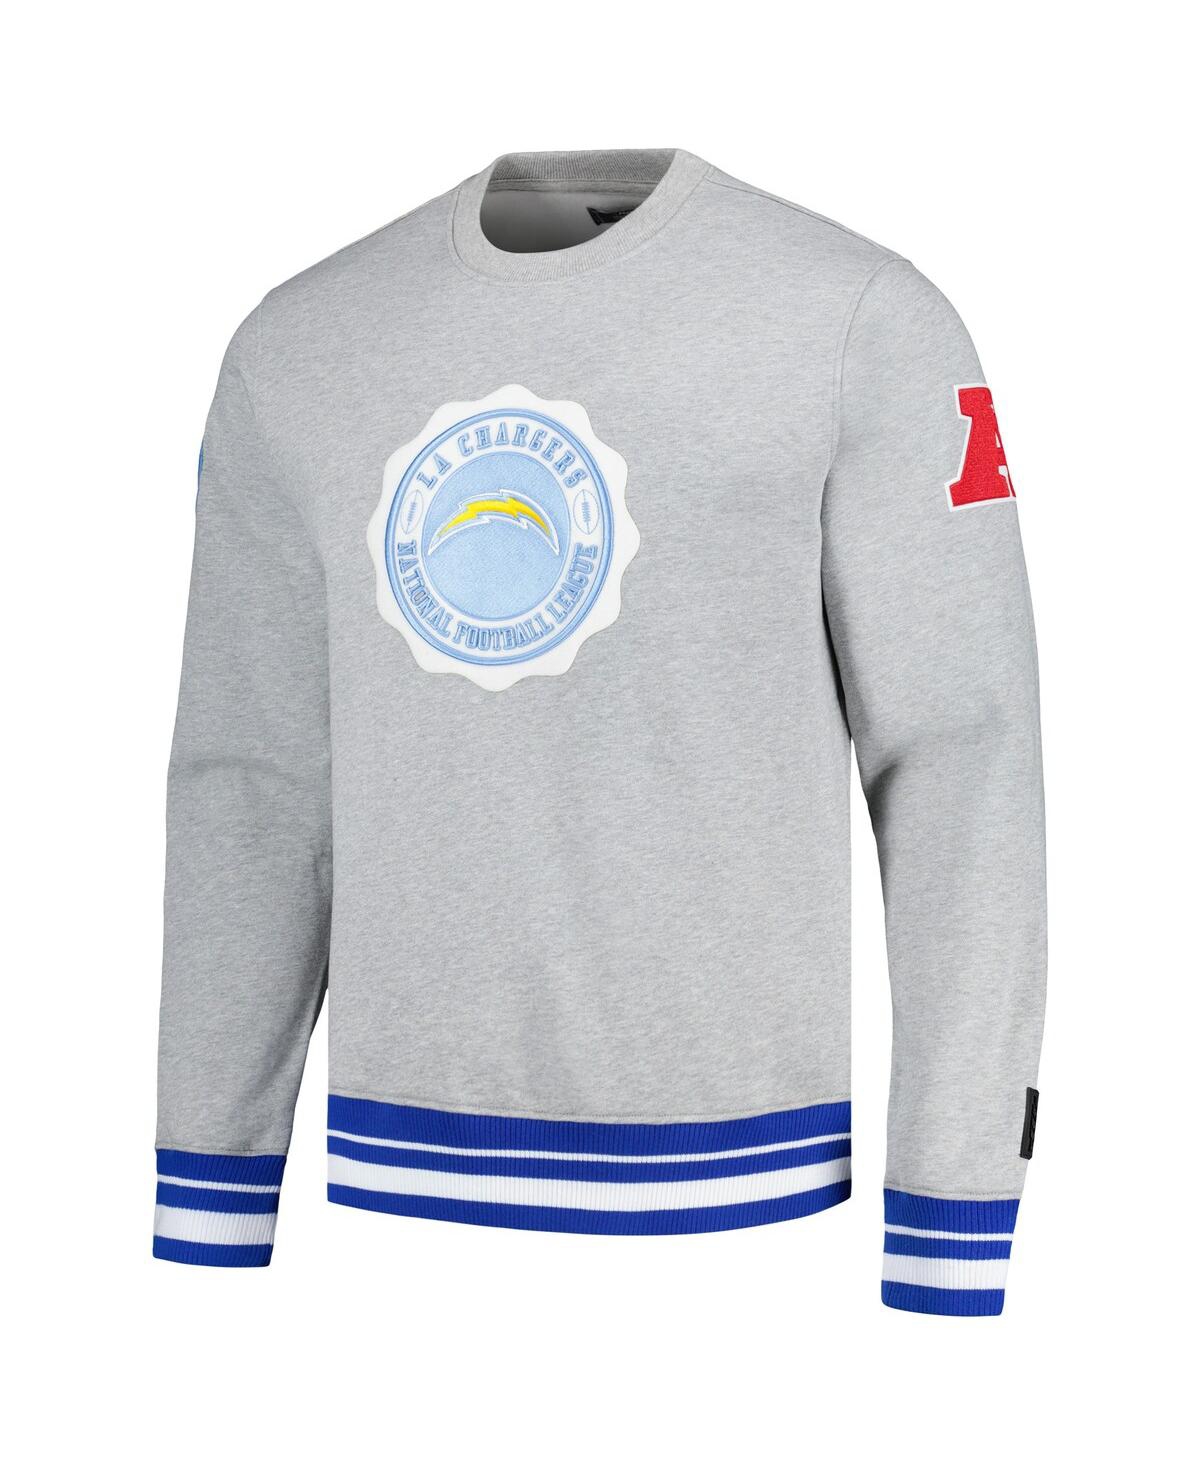 Shop Pro Standard Men's  Heather Gray Los Angeles Chargers Crest Emblem Pullover Sweatshirt